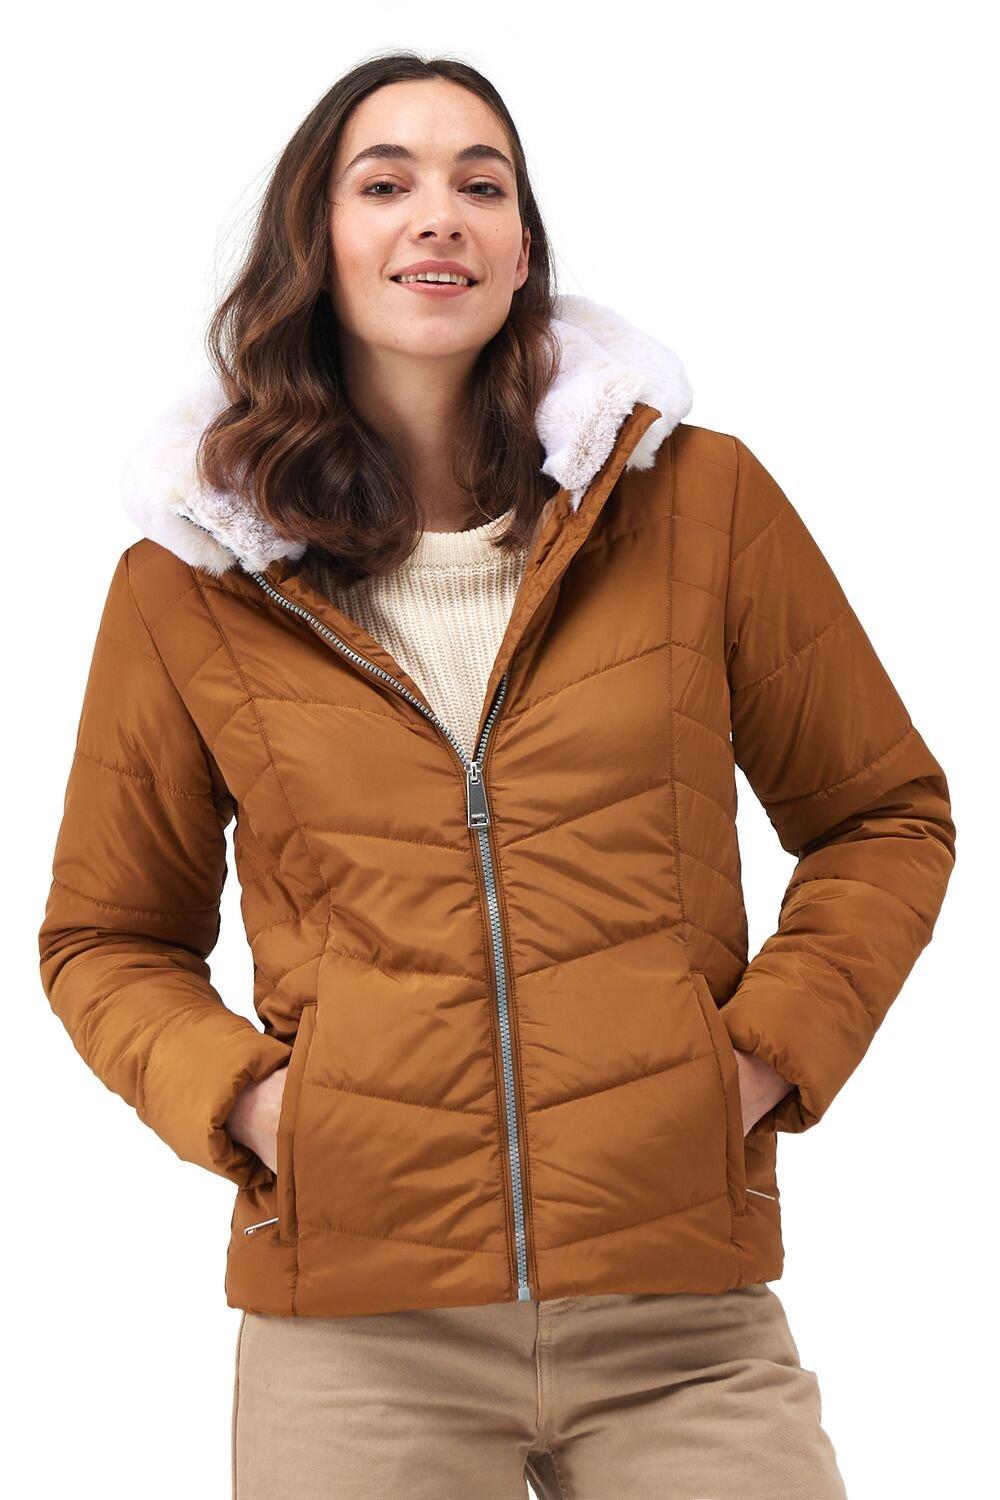 fletcher giovanna some kind of wonderful Прочная утепленная куртка с перегородками Thermoguard Wildrose Regatta, бежевый